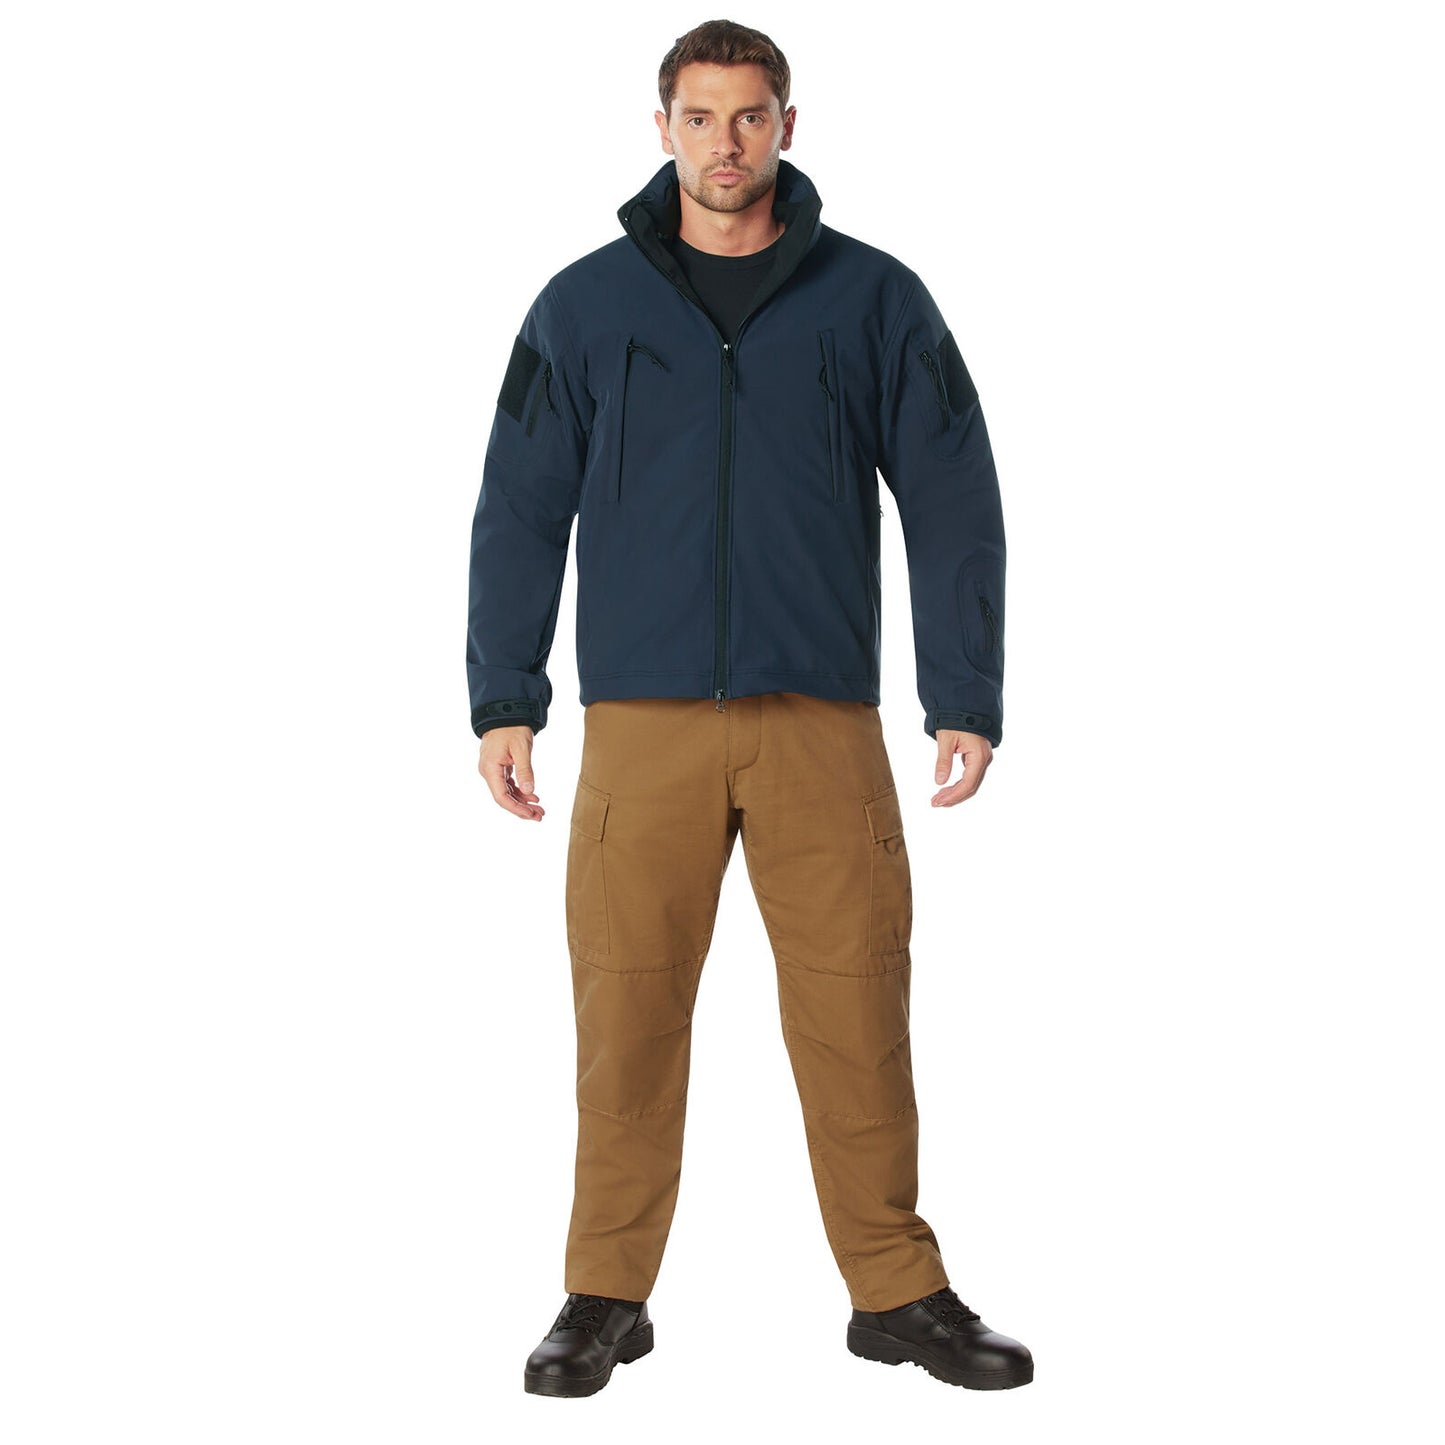 Men's Special Ops 3-In-1 Soft Shell Jacket w/ Fleece Liner - Midnight Navy Blue